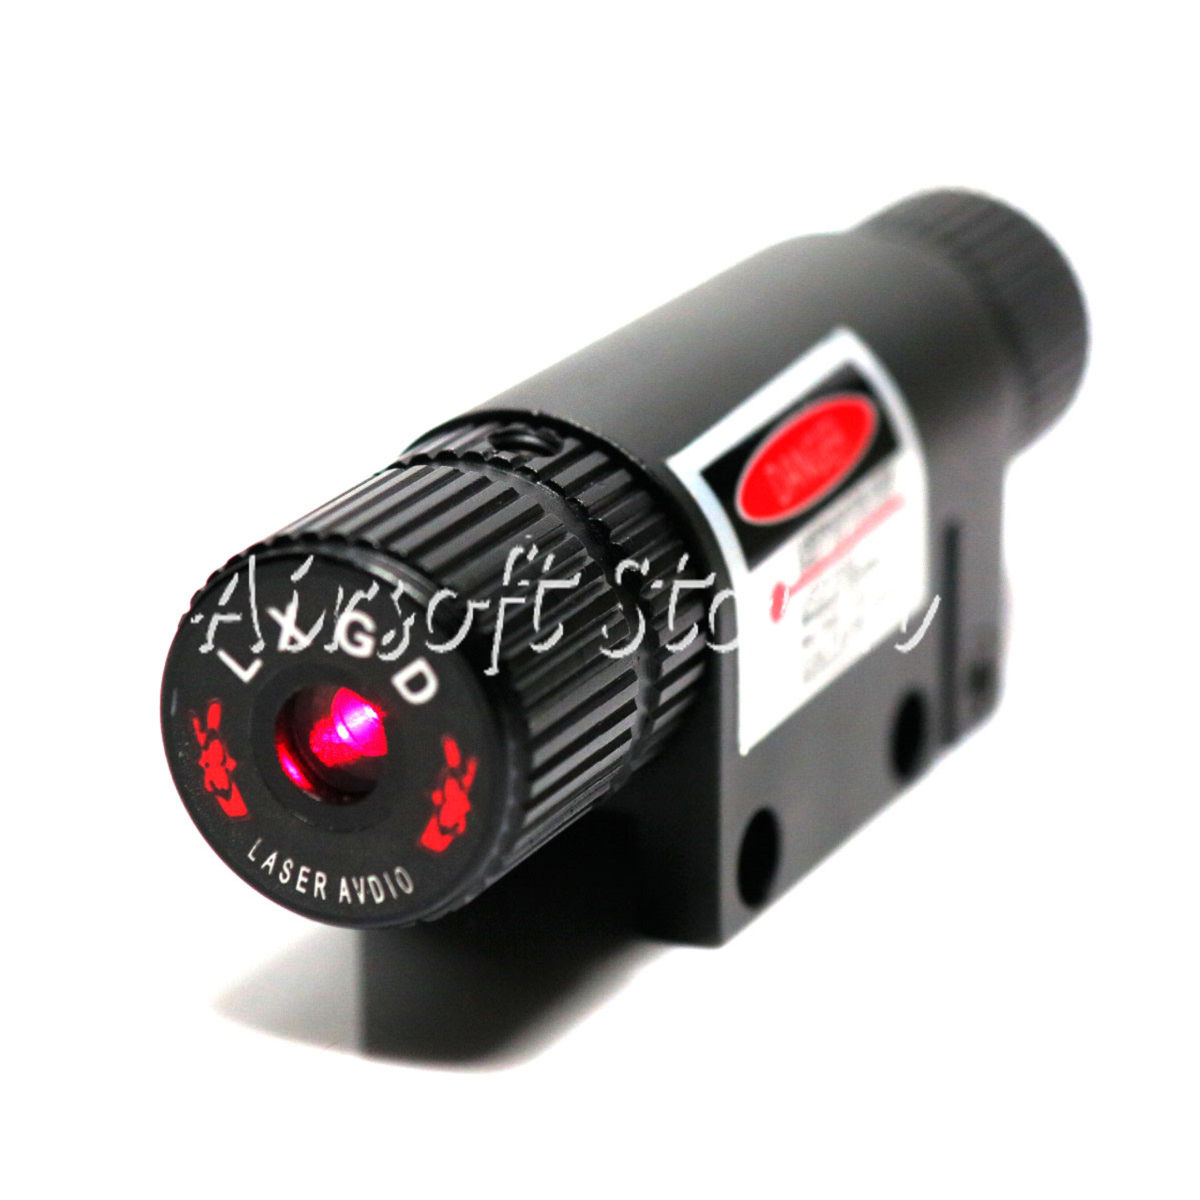 LXGD Tactical Gear Pistol Trigger Guard Red Laser Sight Pointer #Long JG-7